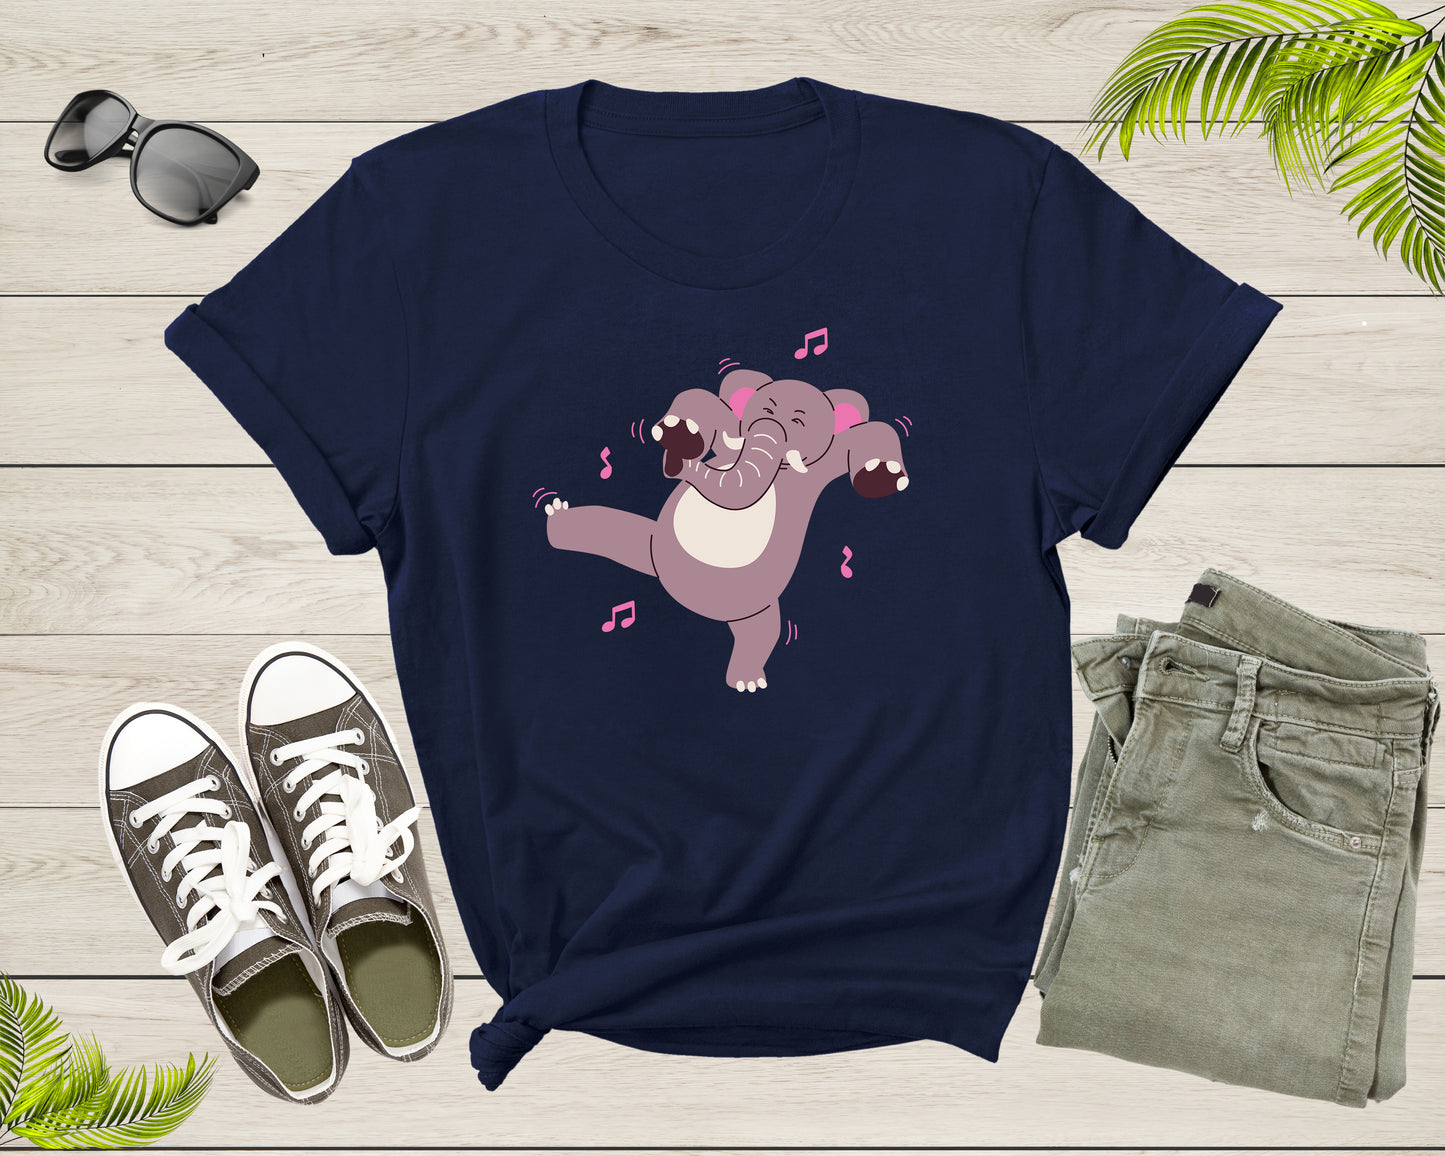 Funny Cute Dancing Elephant for Men Women Kids Boys Girls T-Shirt Elephant Lover Gift T Shirt for Men Women Kids Boys Girls Graphic Tshirt